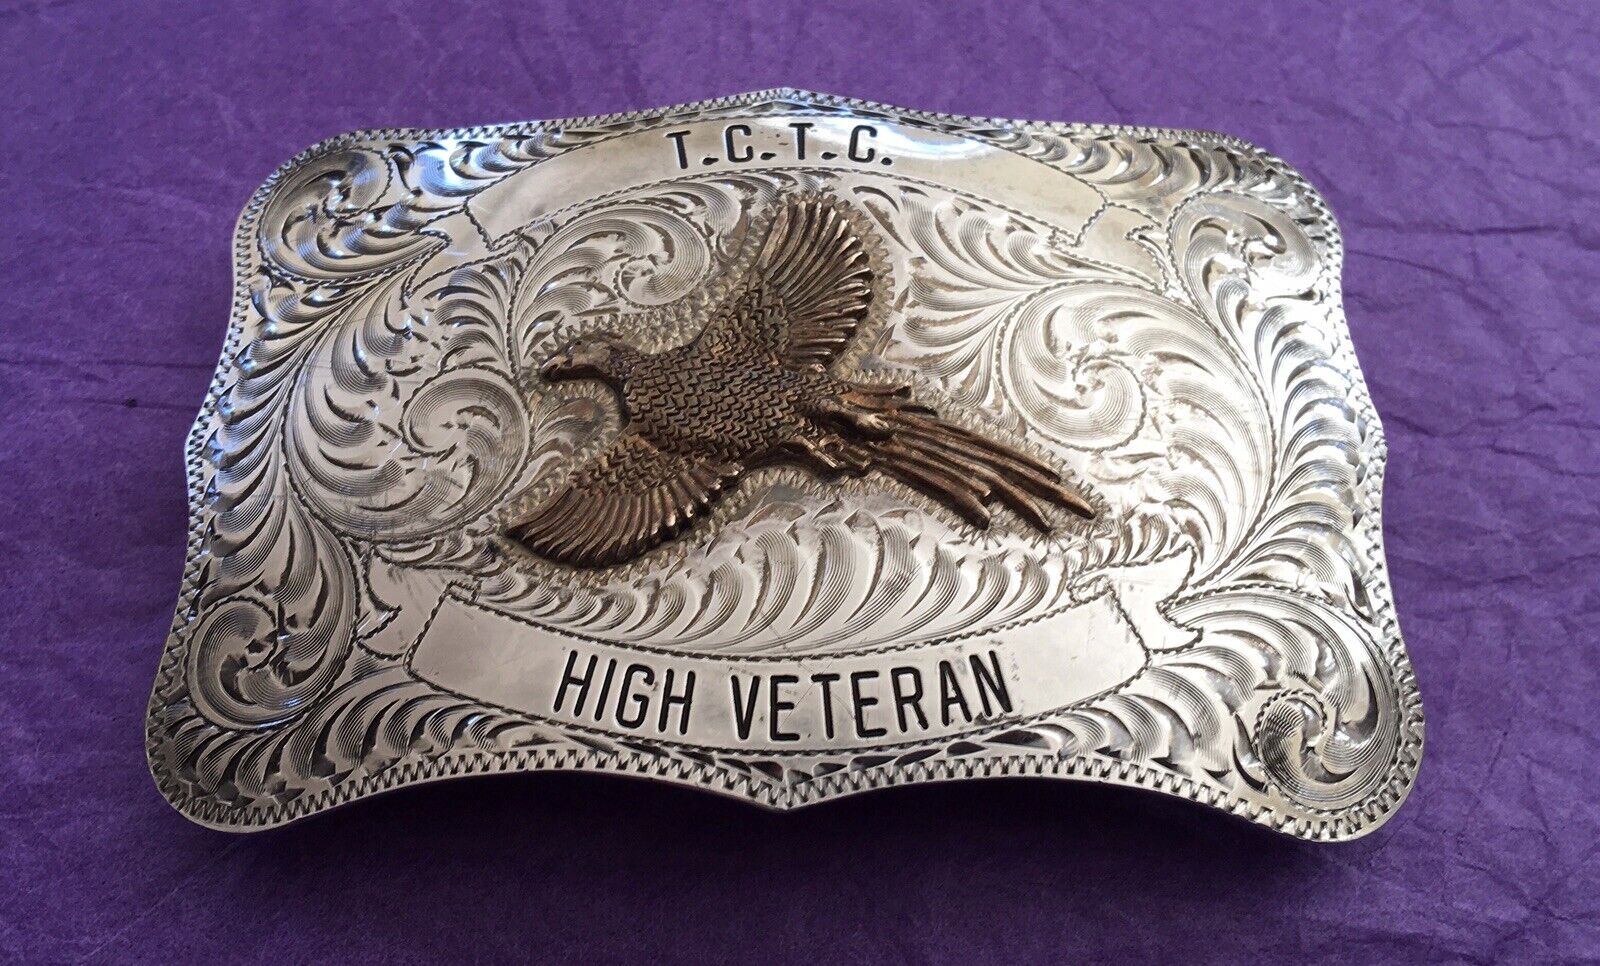 Old Vintage Sterling Silver Face TCTC High Veteran Gun Shoot Trophy Belt Buckle